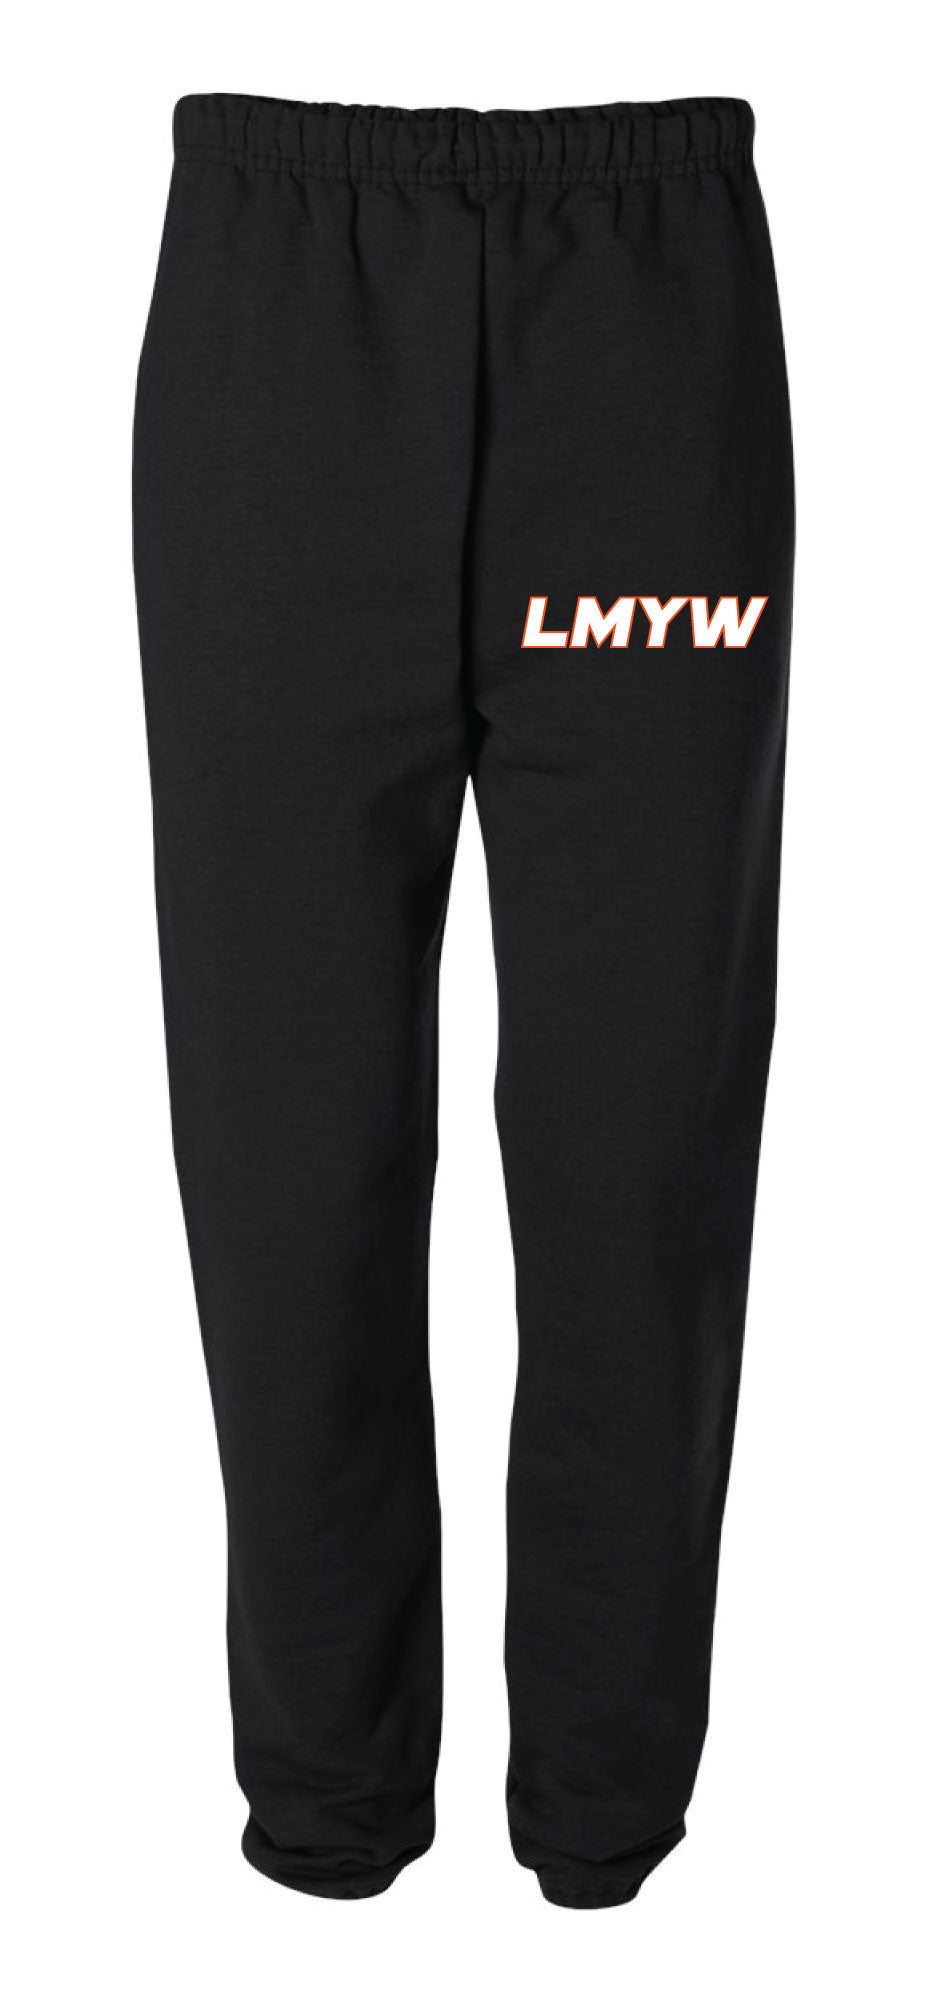 LMYW Cotton Sweatpants - Black - 5KounT2018